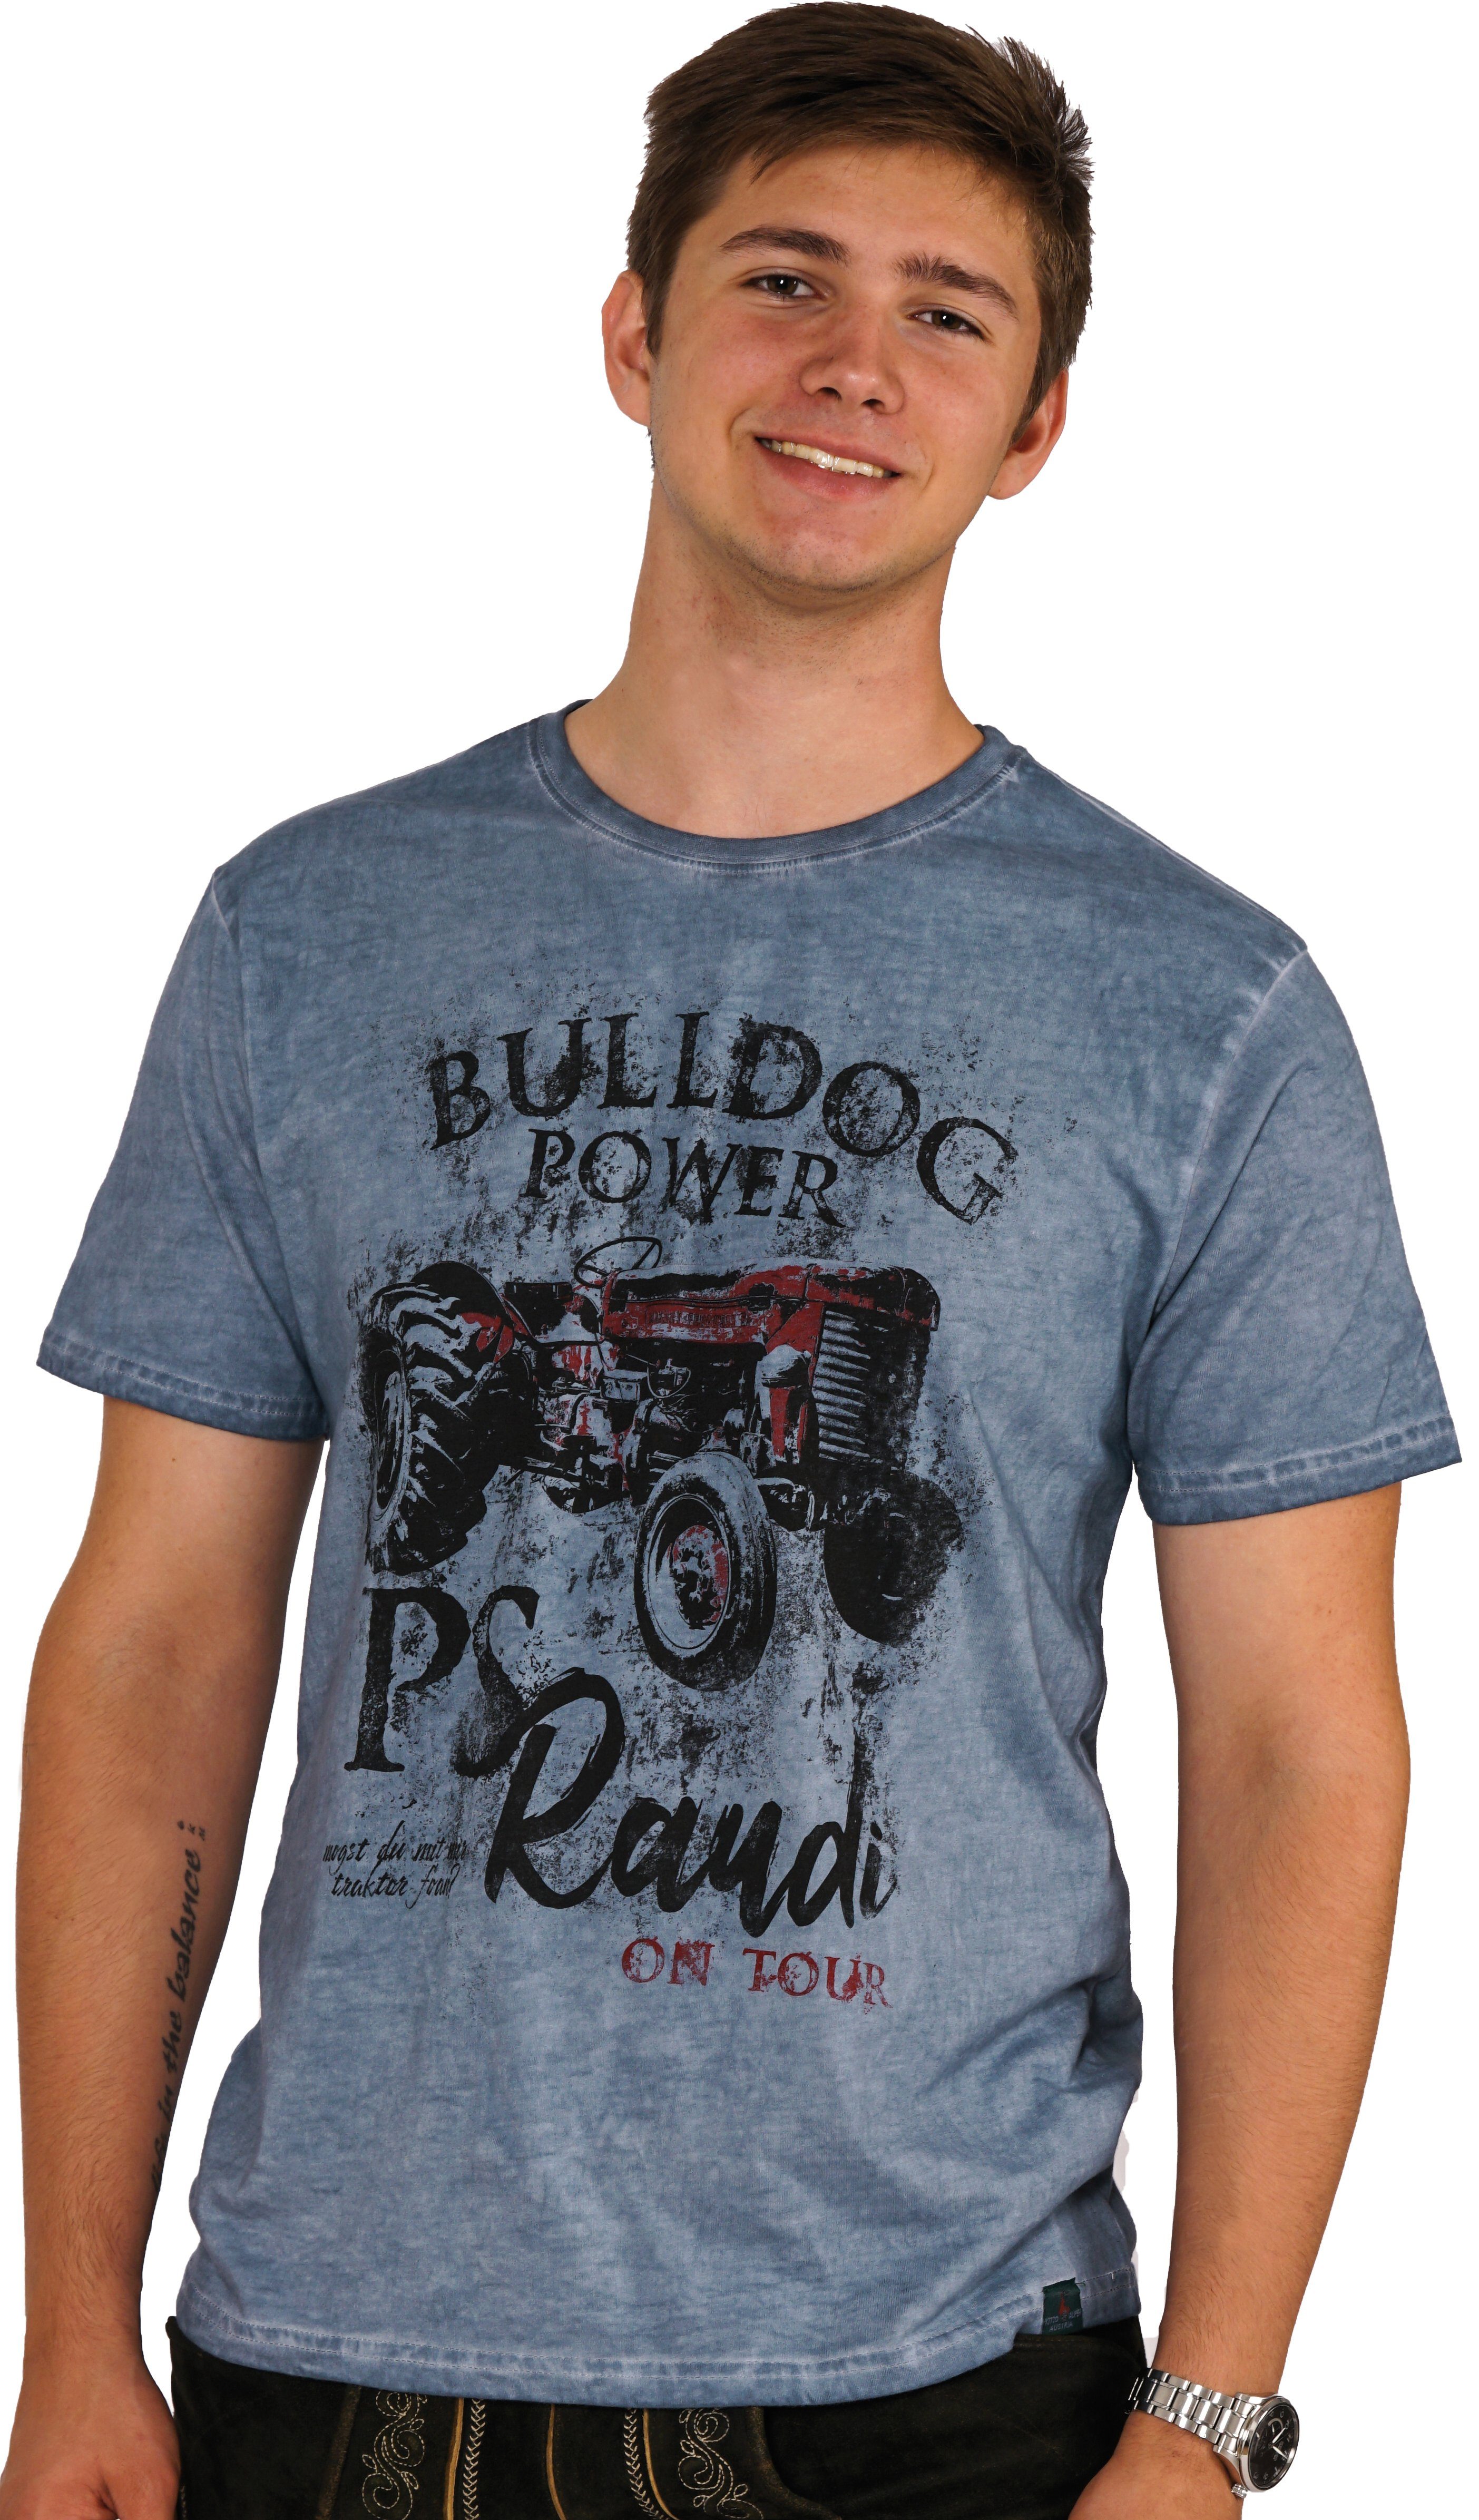 Soreso® Trachtenshirt Bulldog Power PS Raudi on Tour Blau